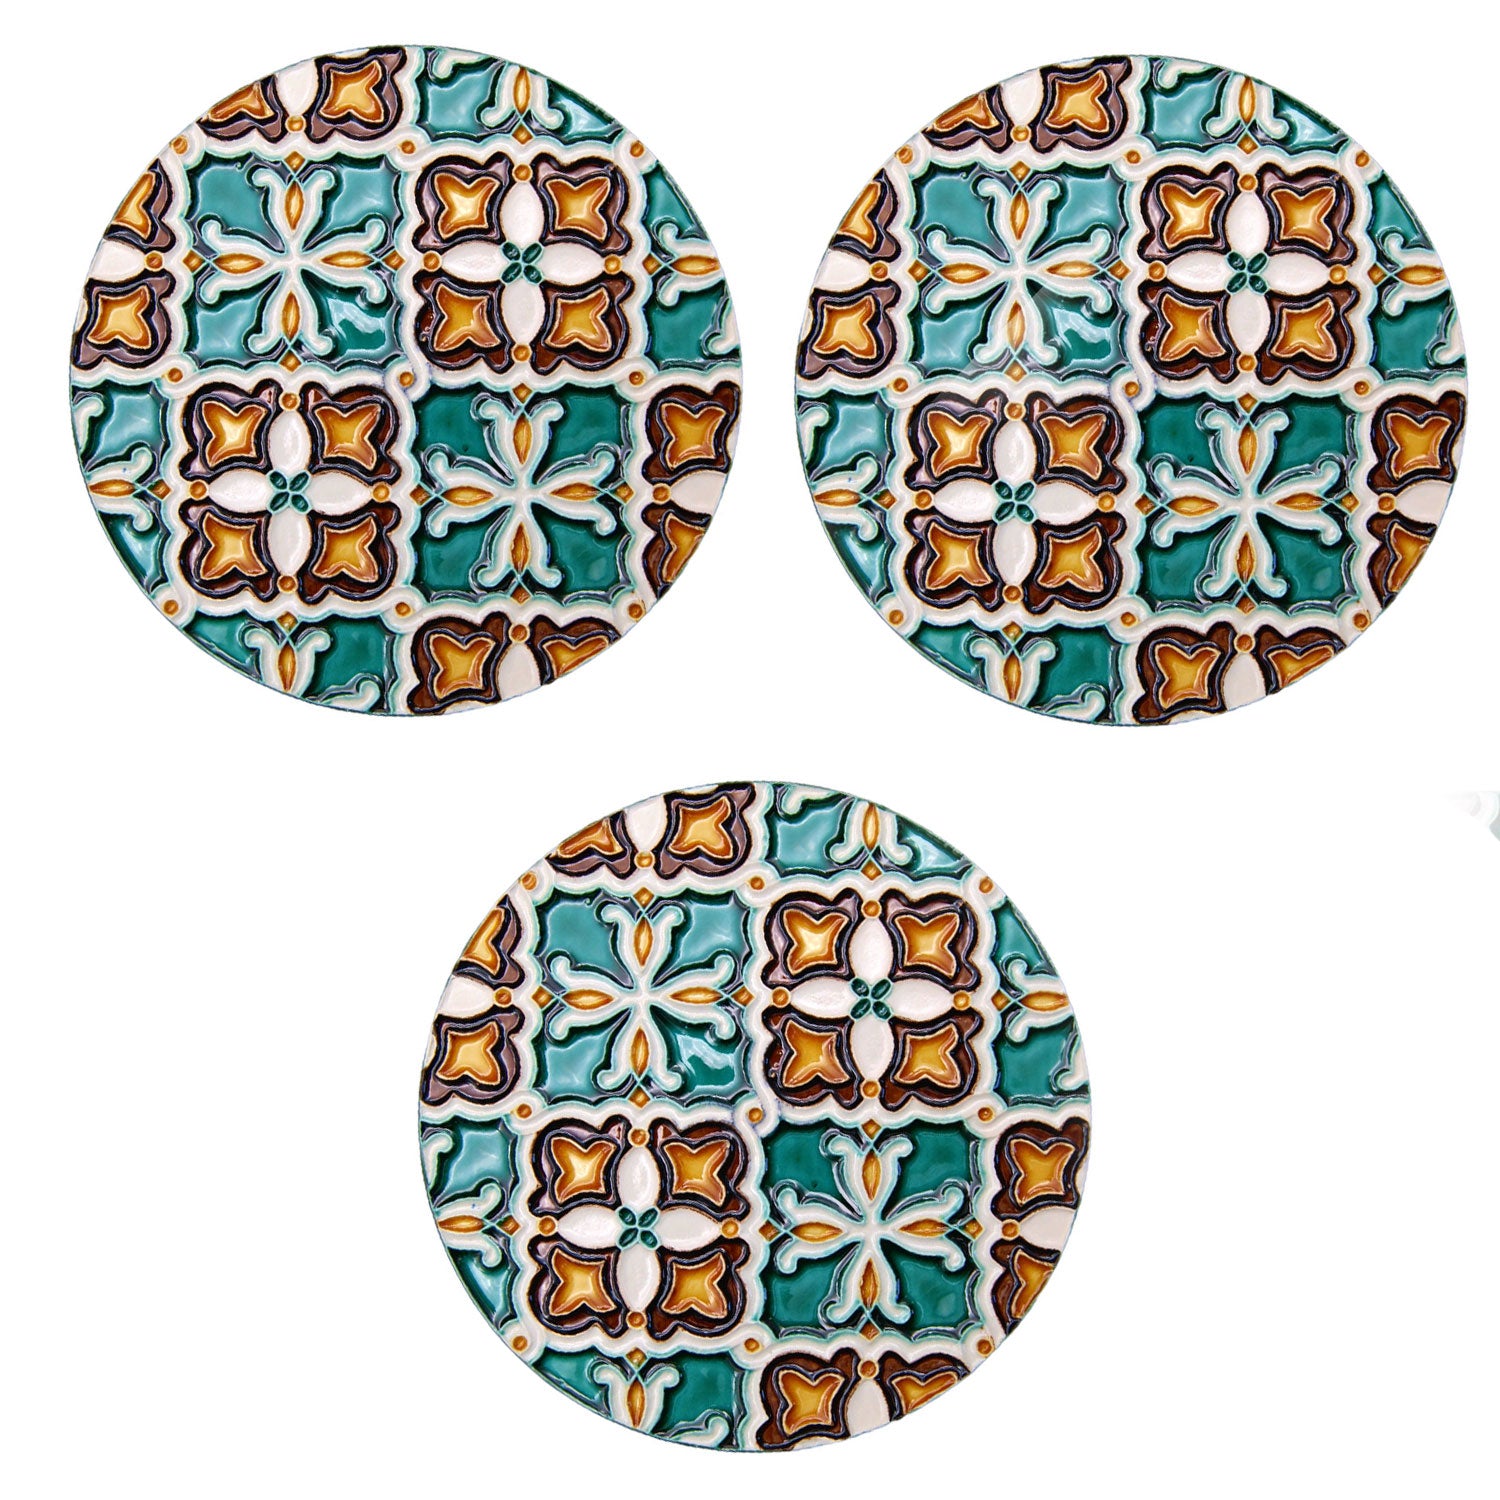 Hand painted Portuguese Ceramic Tile Round Coaster – Set of 3